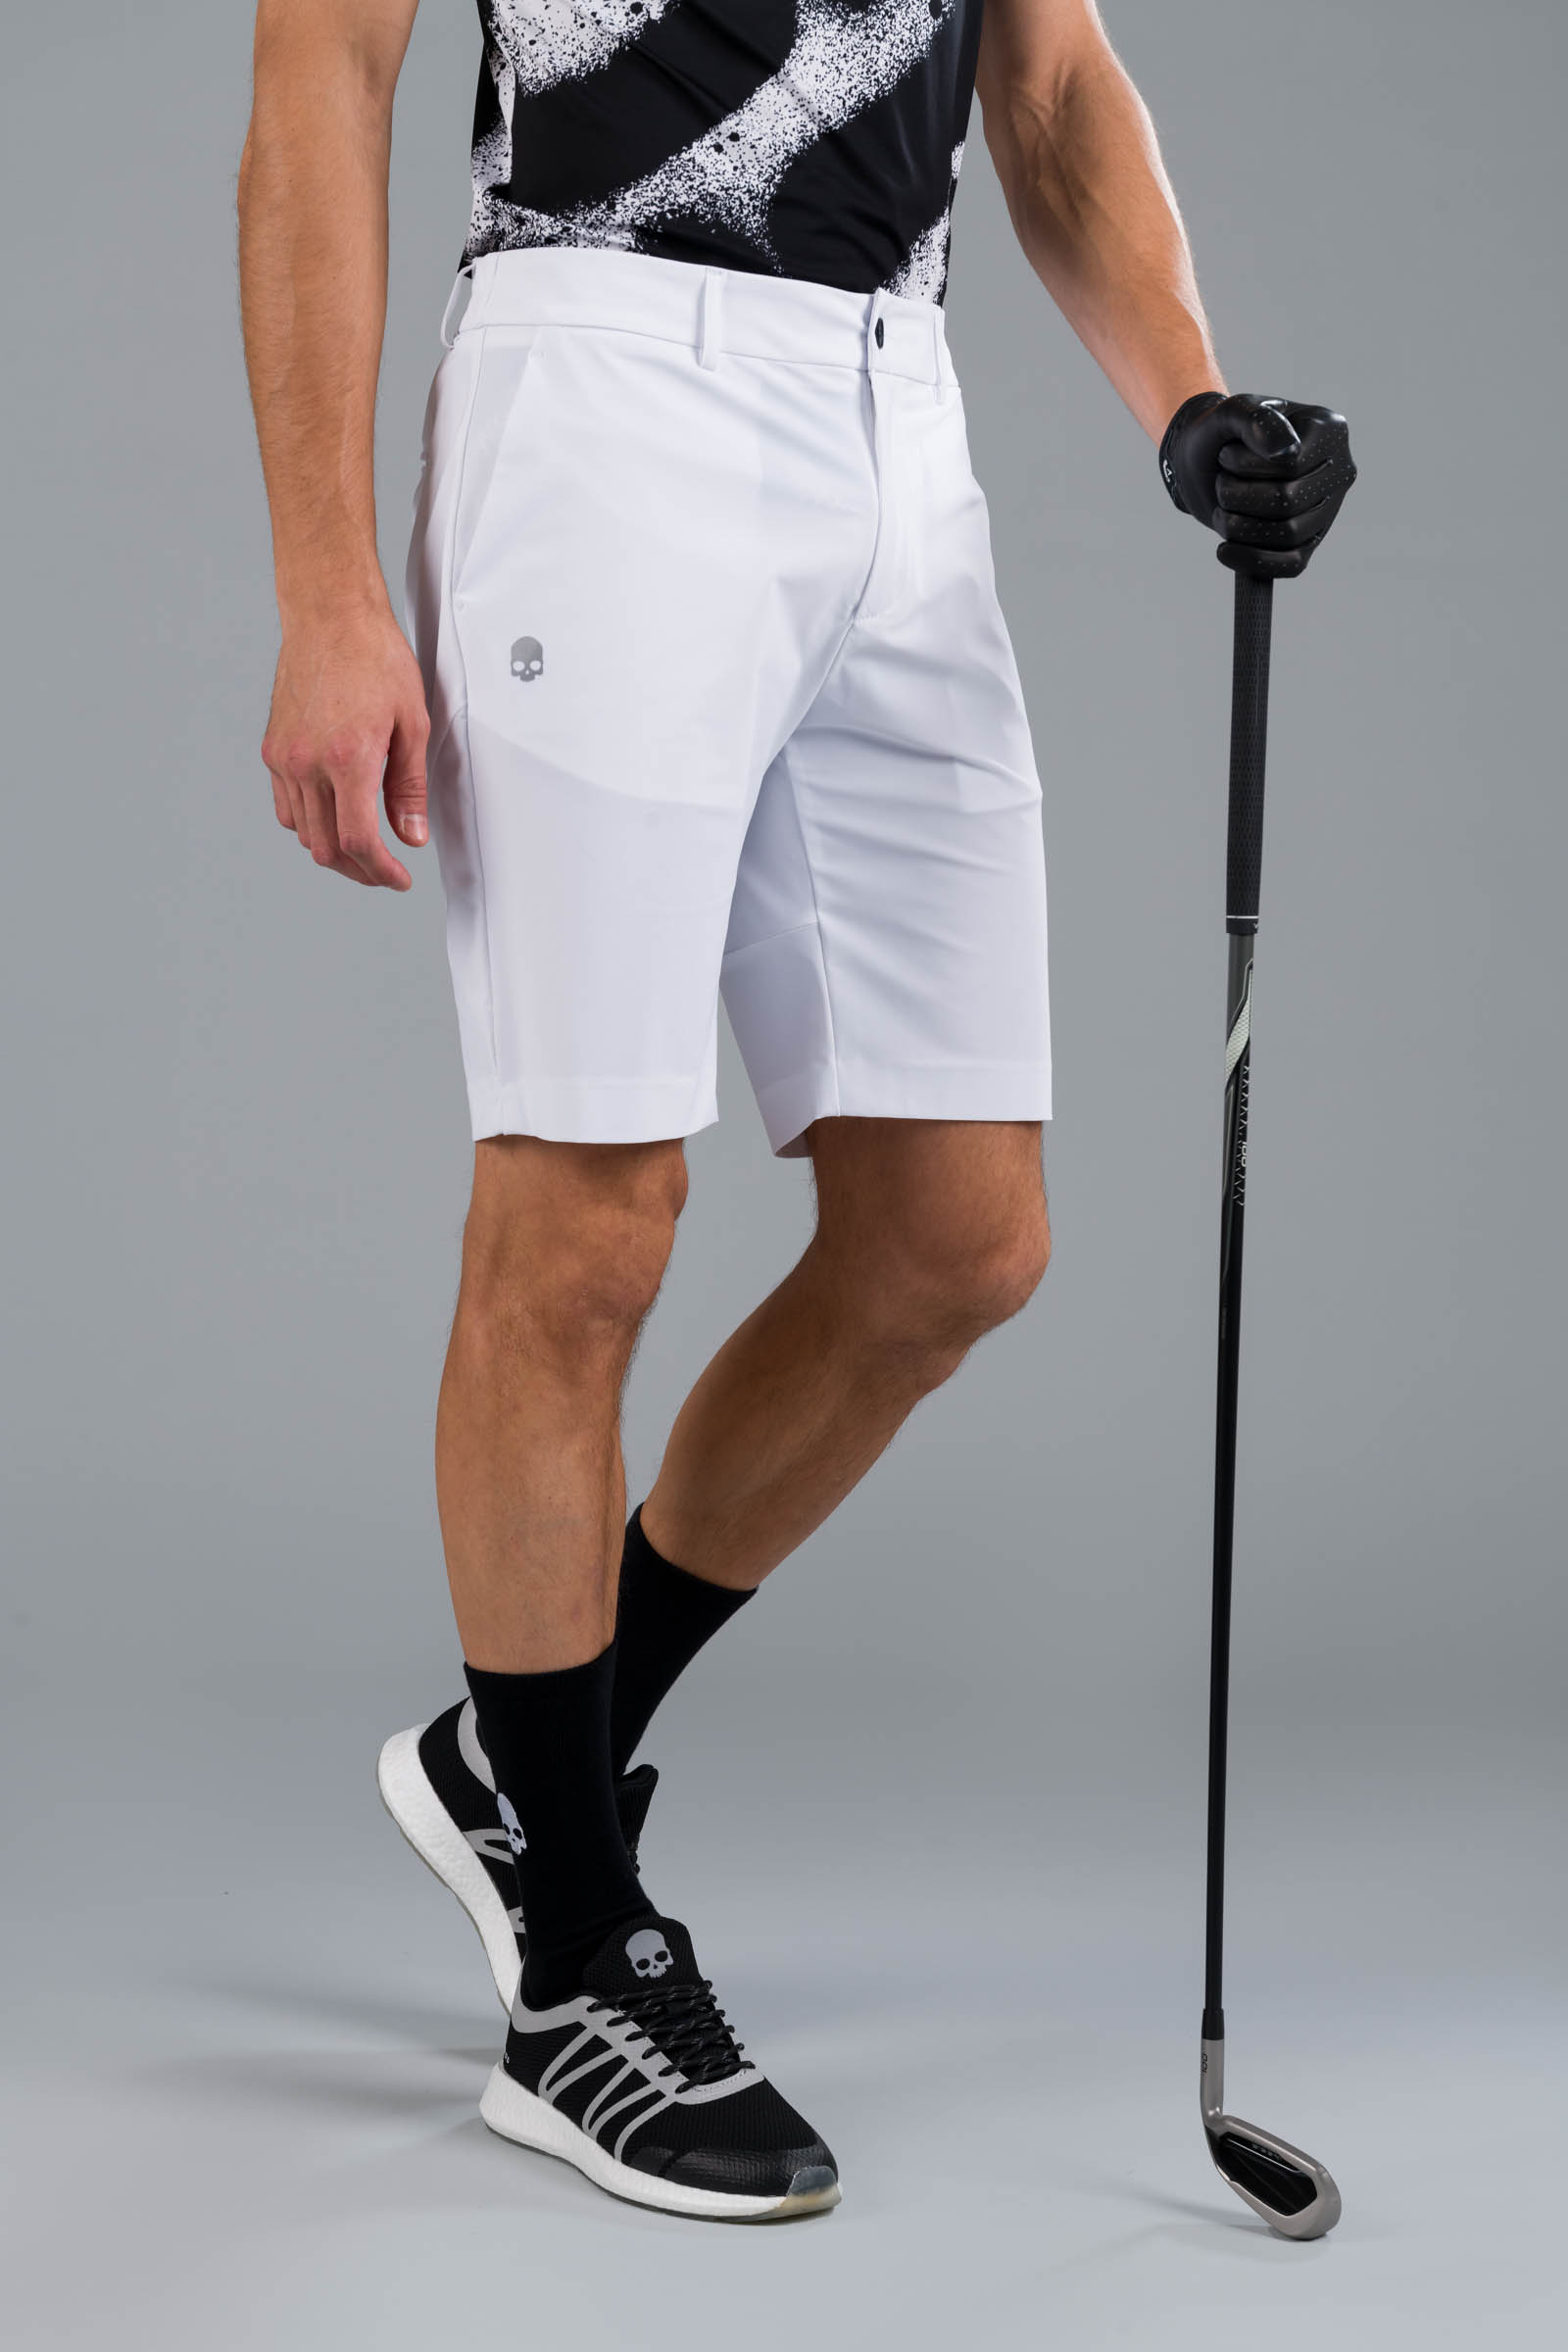 GOLF SHORTS - WHITE - Abbigliamento sportivo | Hydrogen